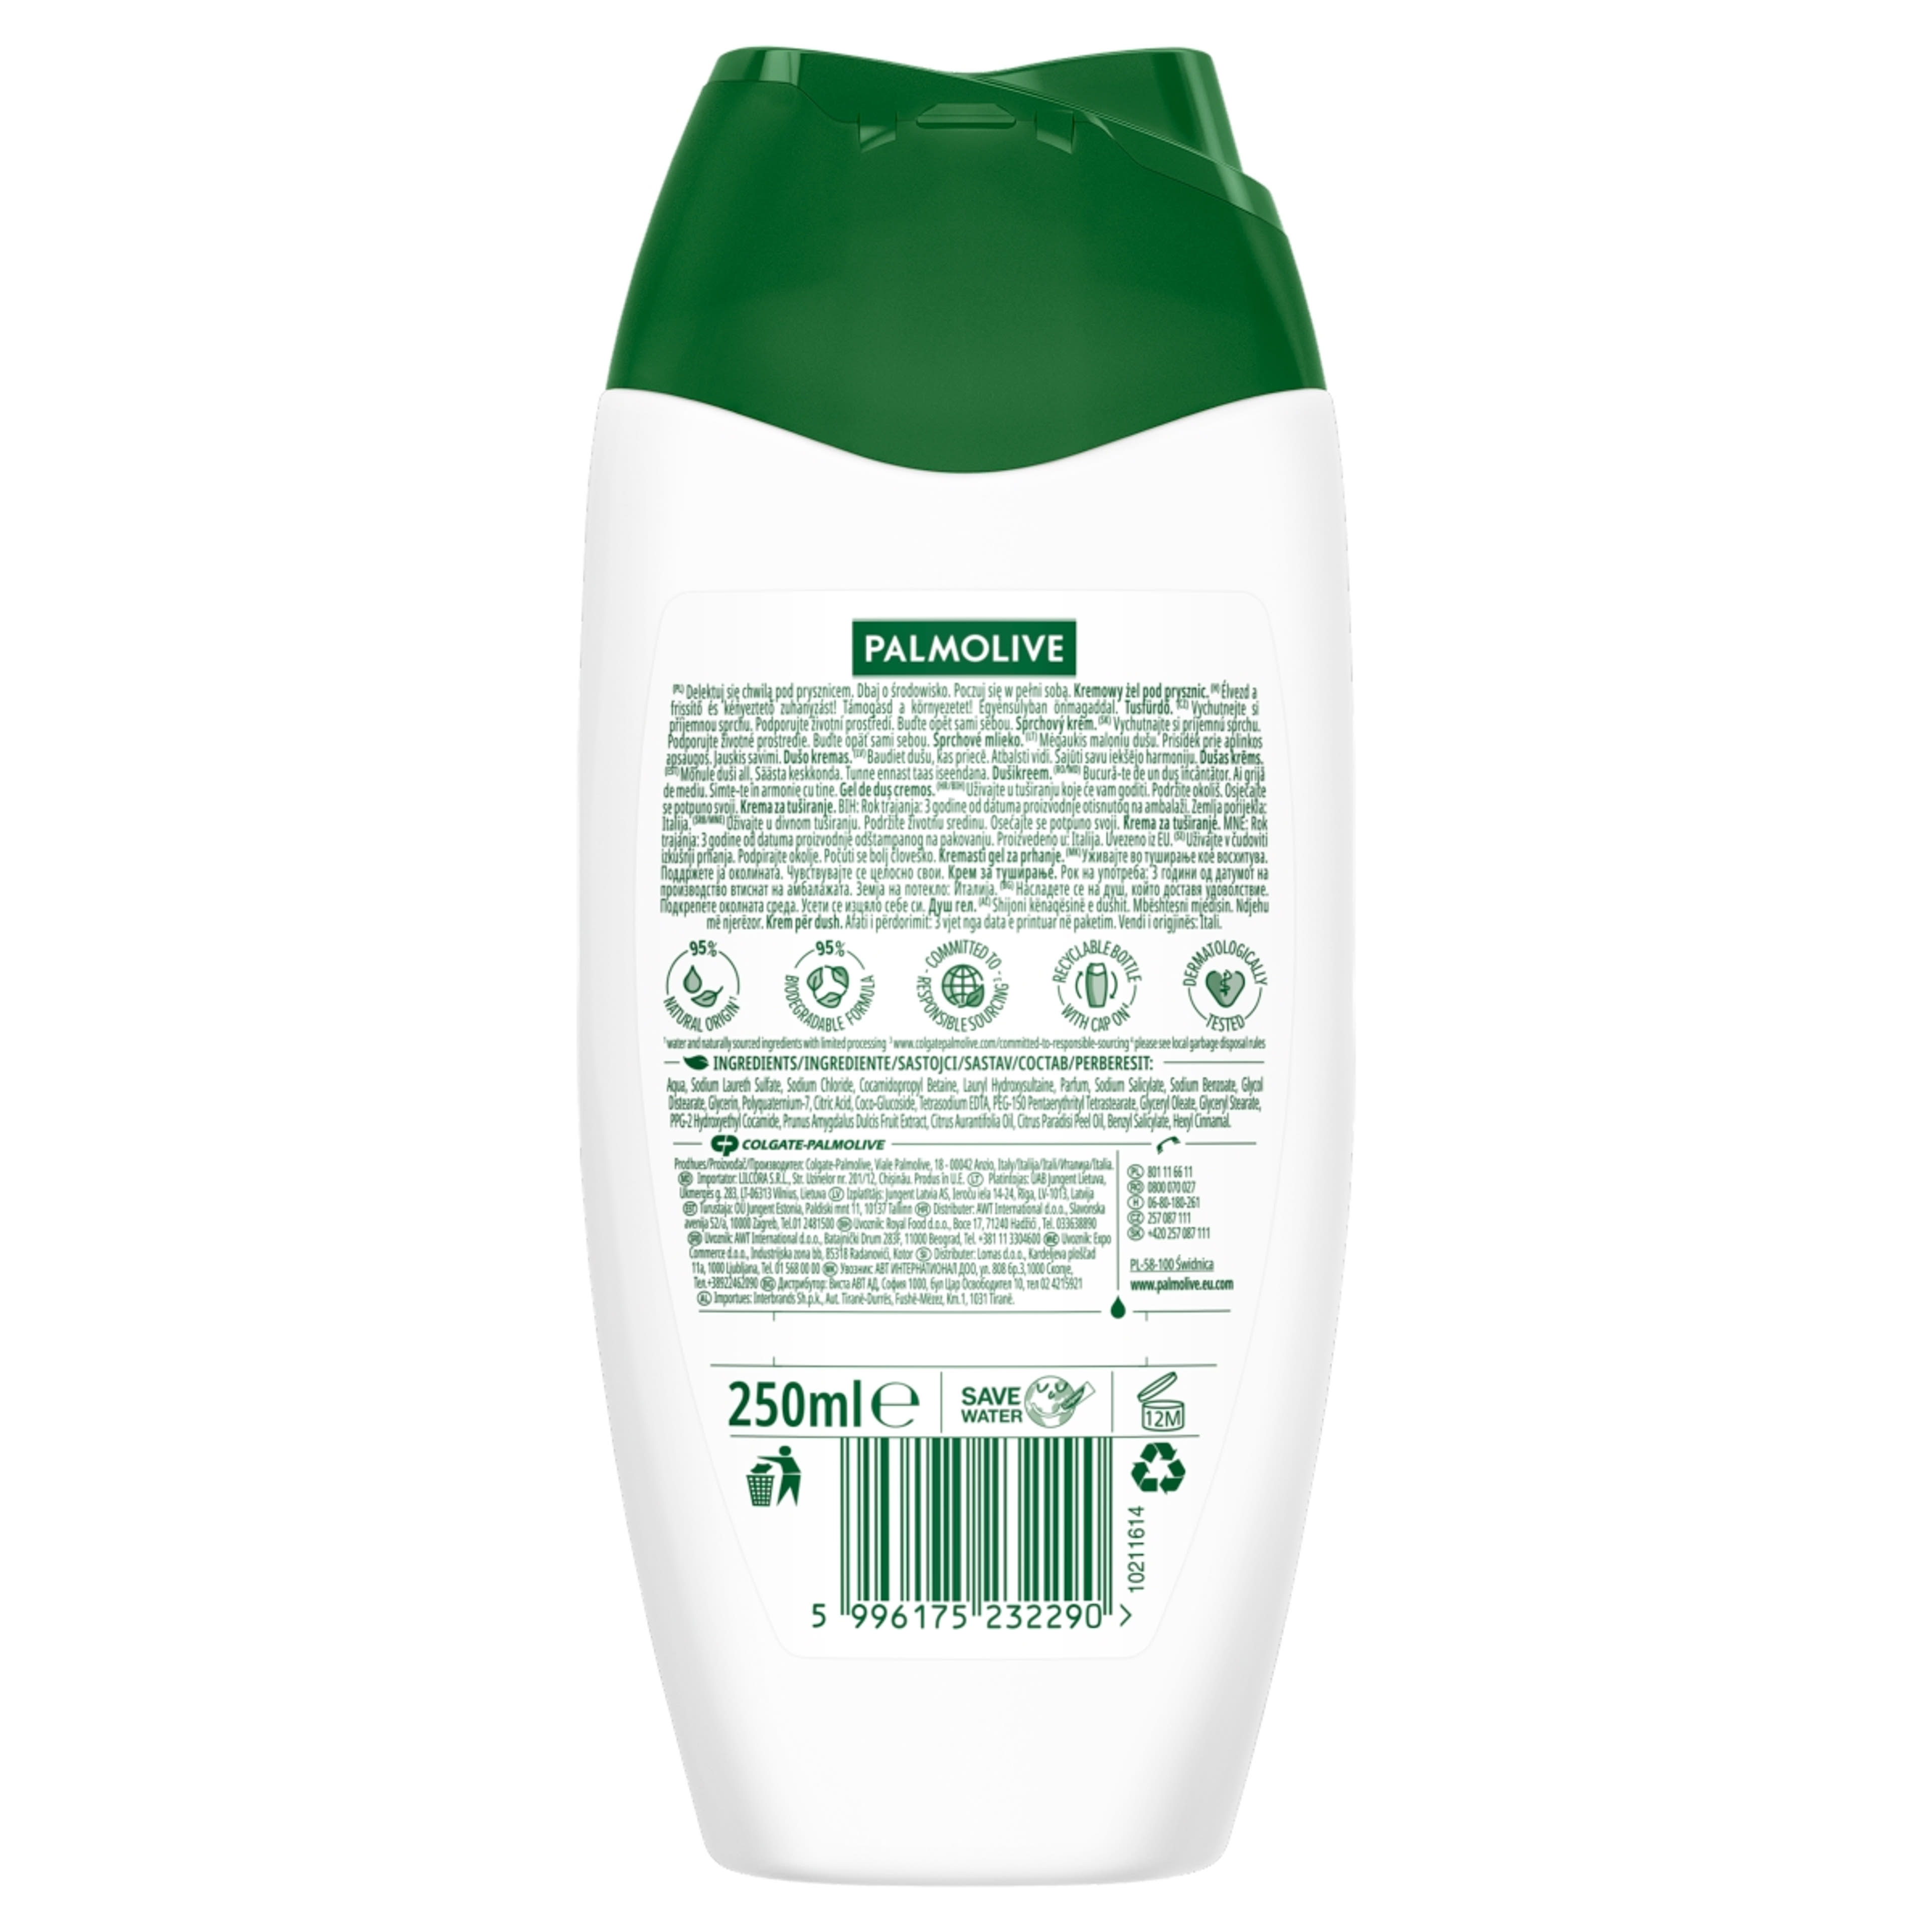 Palmolive Naturals Sensitive Skin Milk Proteins krémes tusfürdő - 250 ml-2